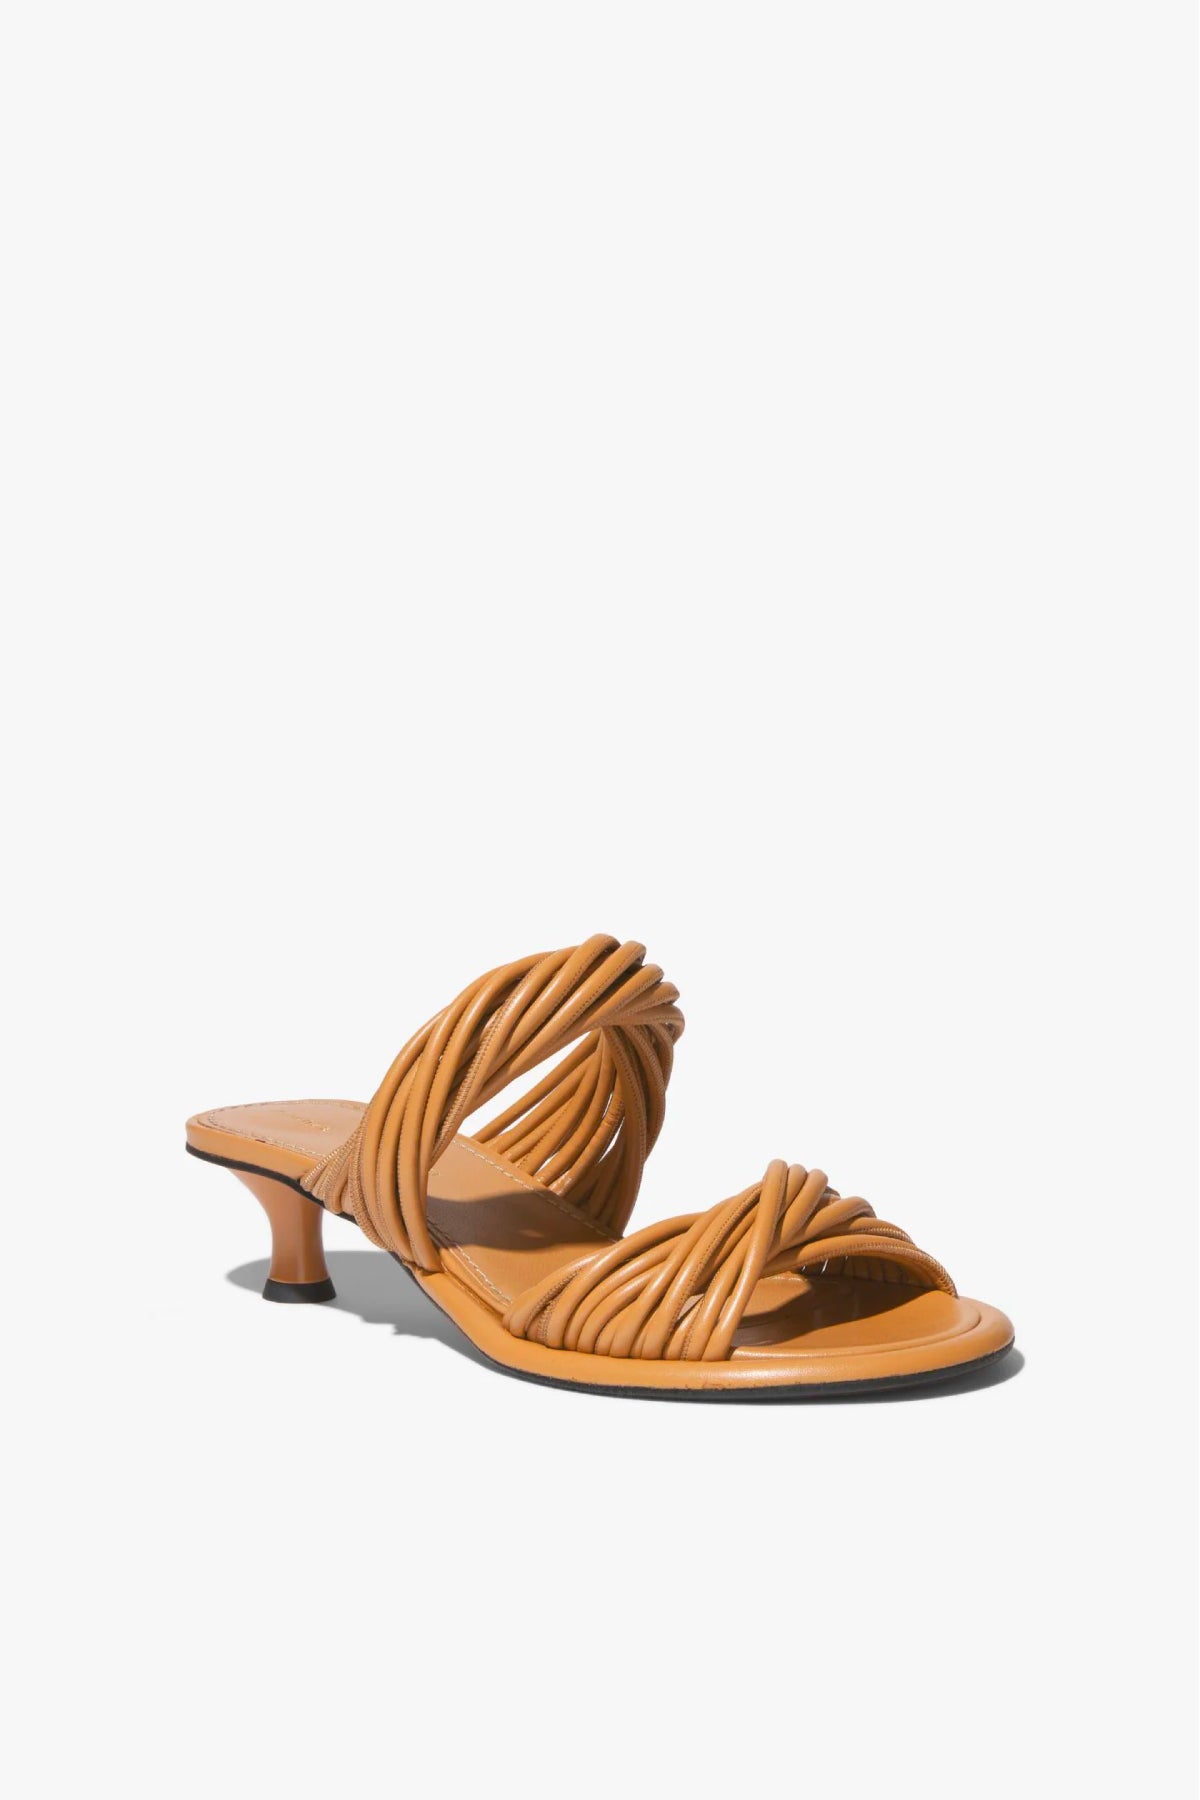 Proenza Schouler Pipe Rolo Sandal - Amber